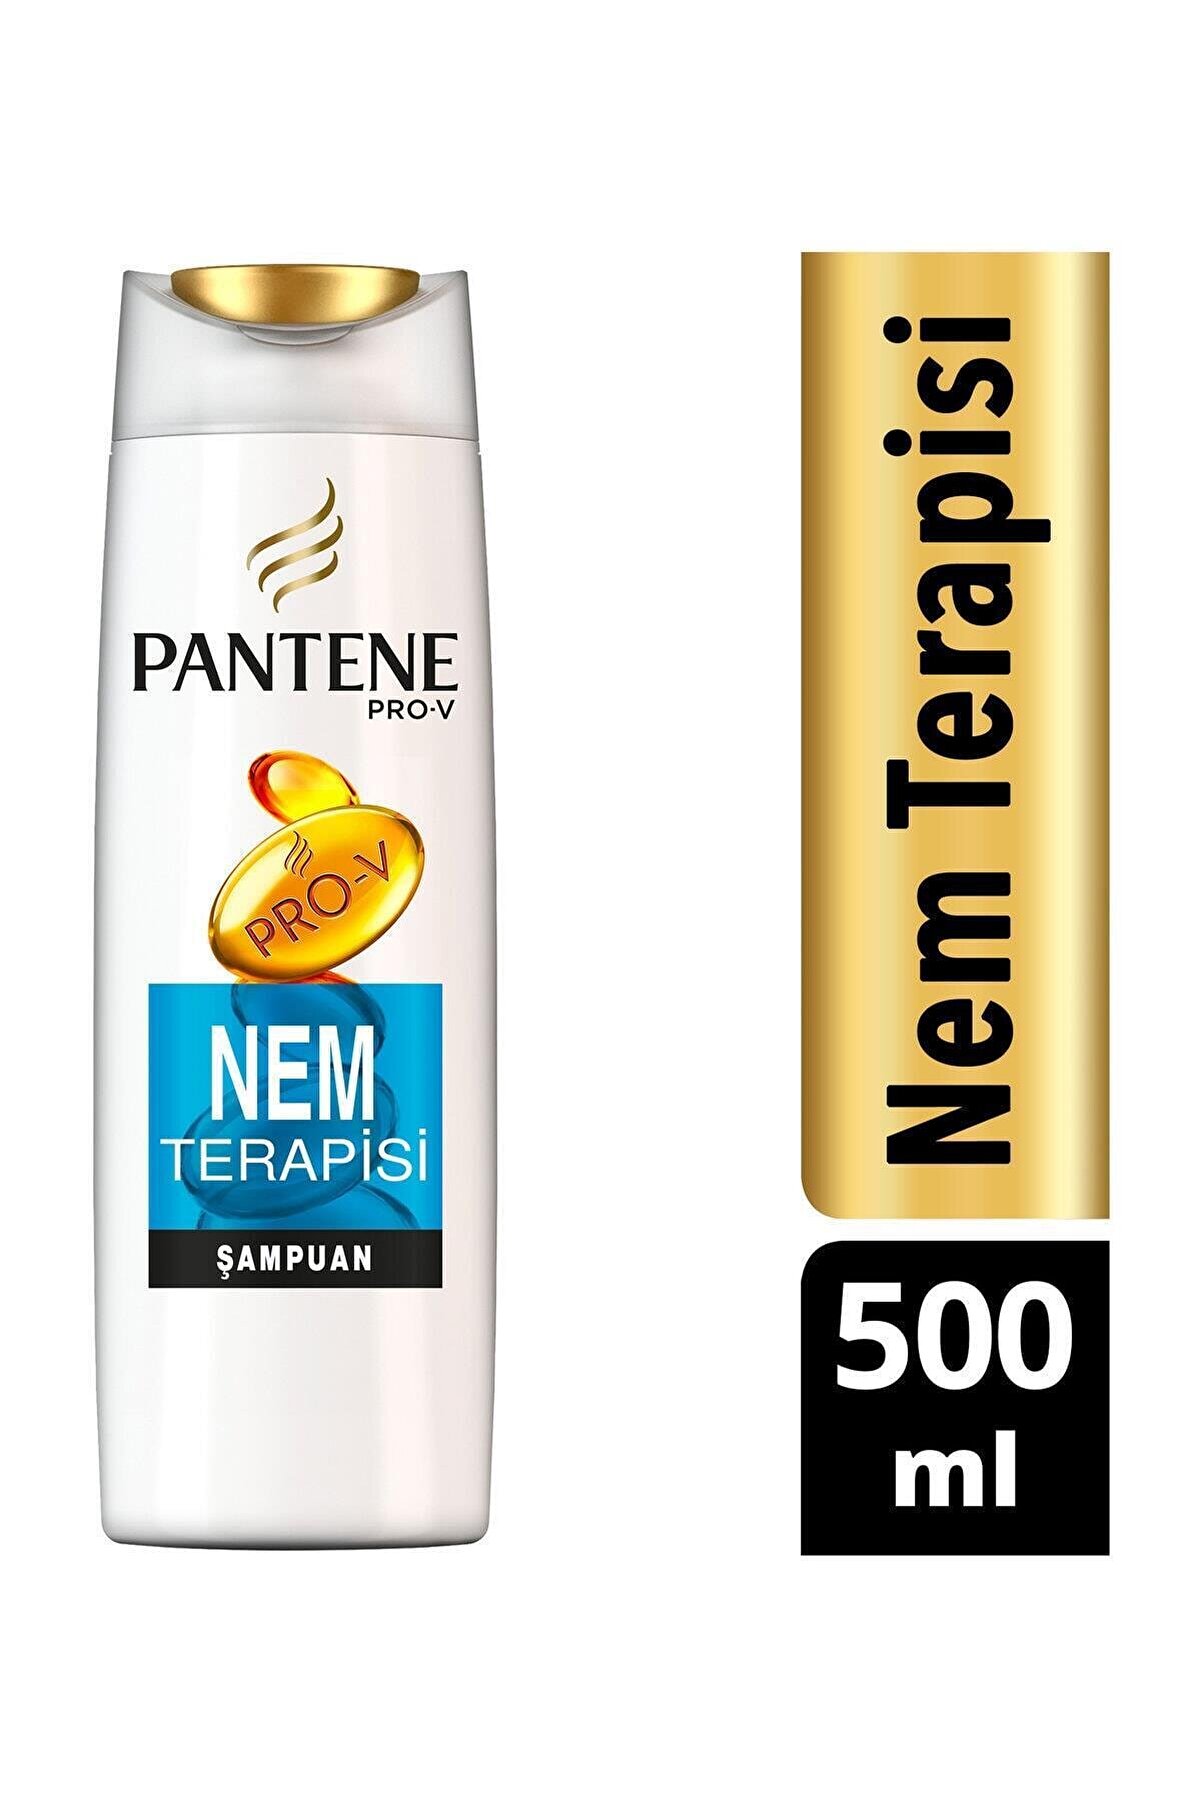 Pantene Şampuan Nem Terapisi 500 ml